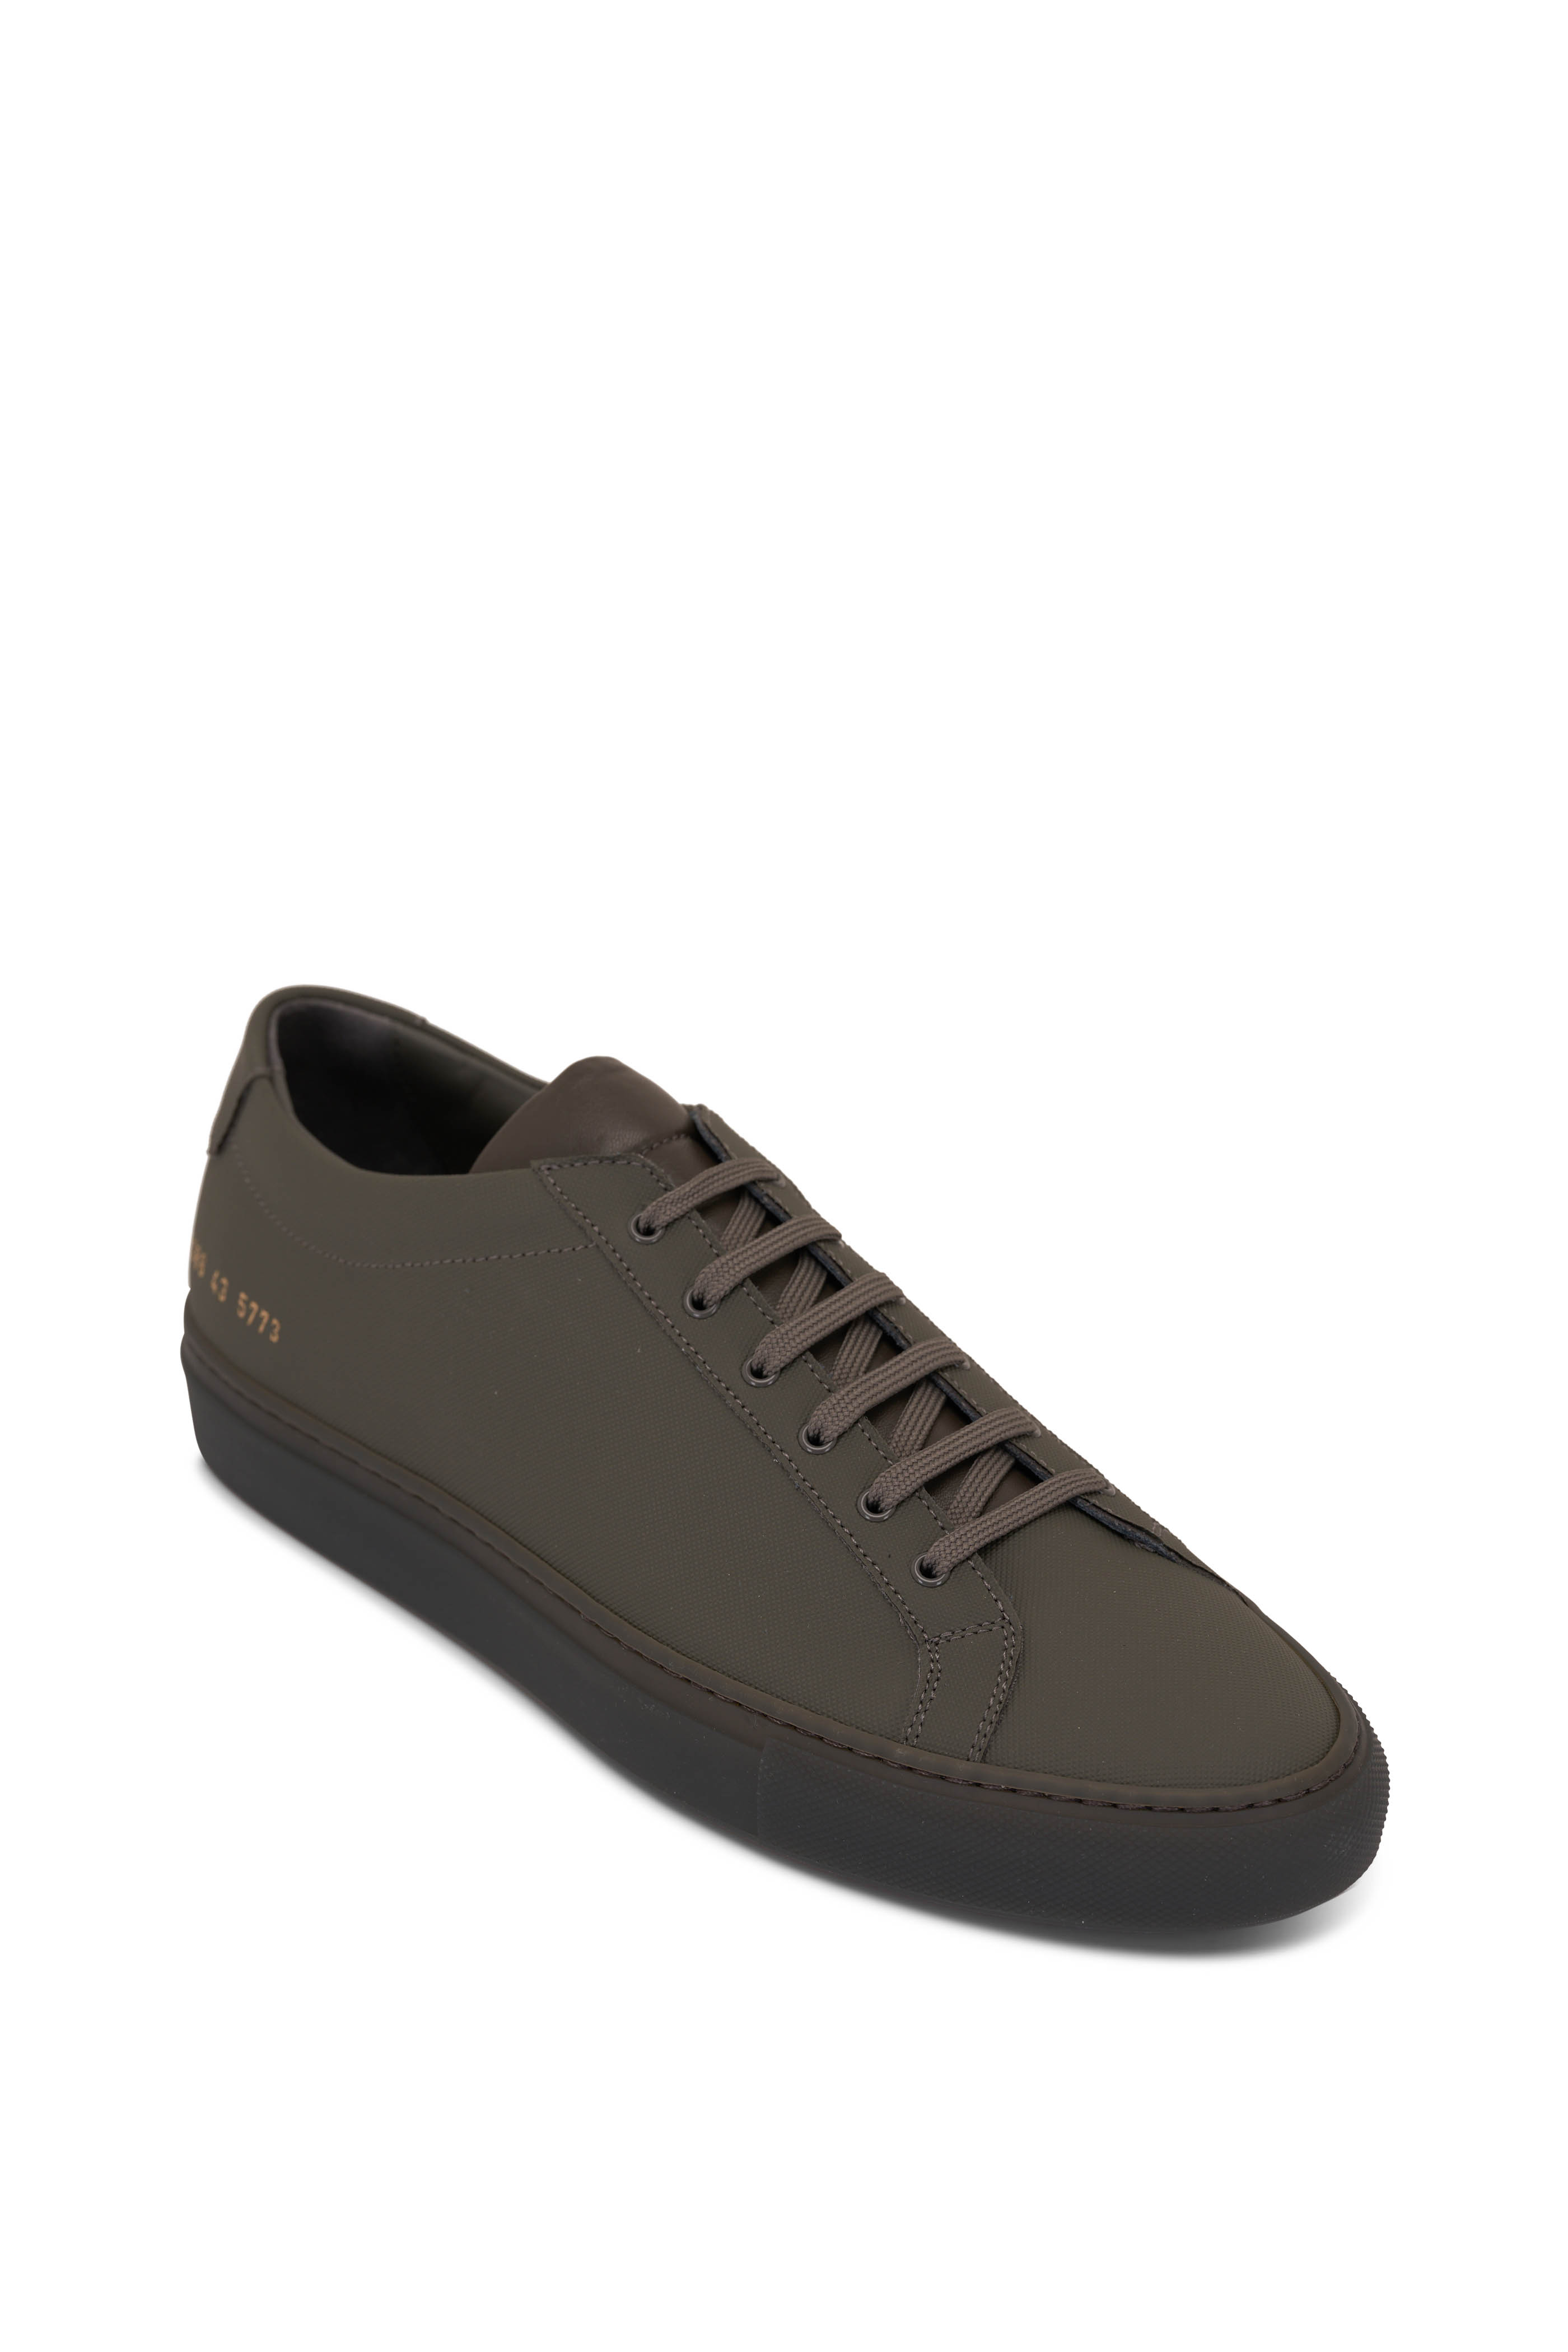 Common Projects - Men - Original Achilles Leather Sneakers Gray - EU 42